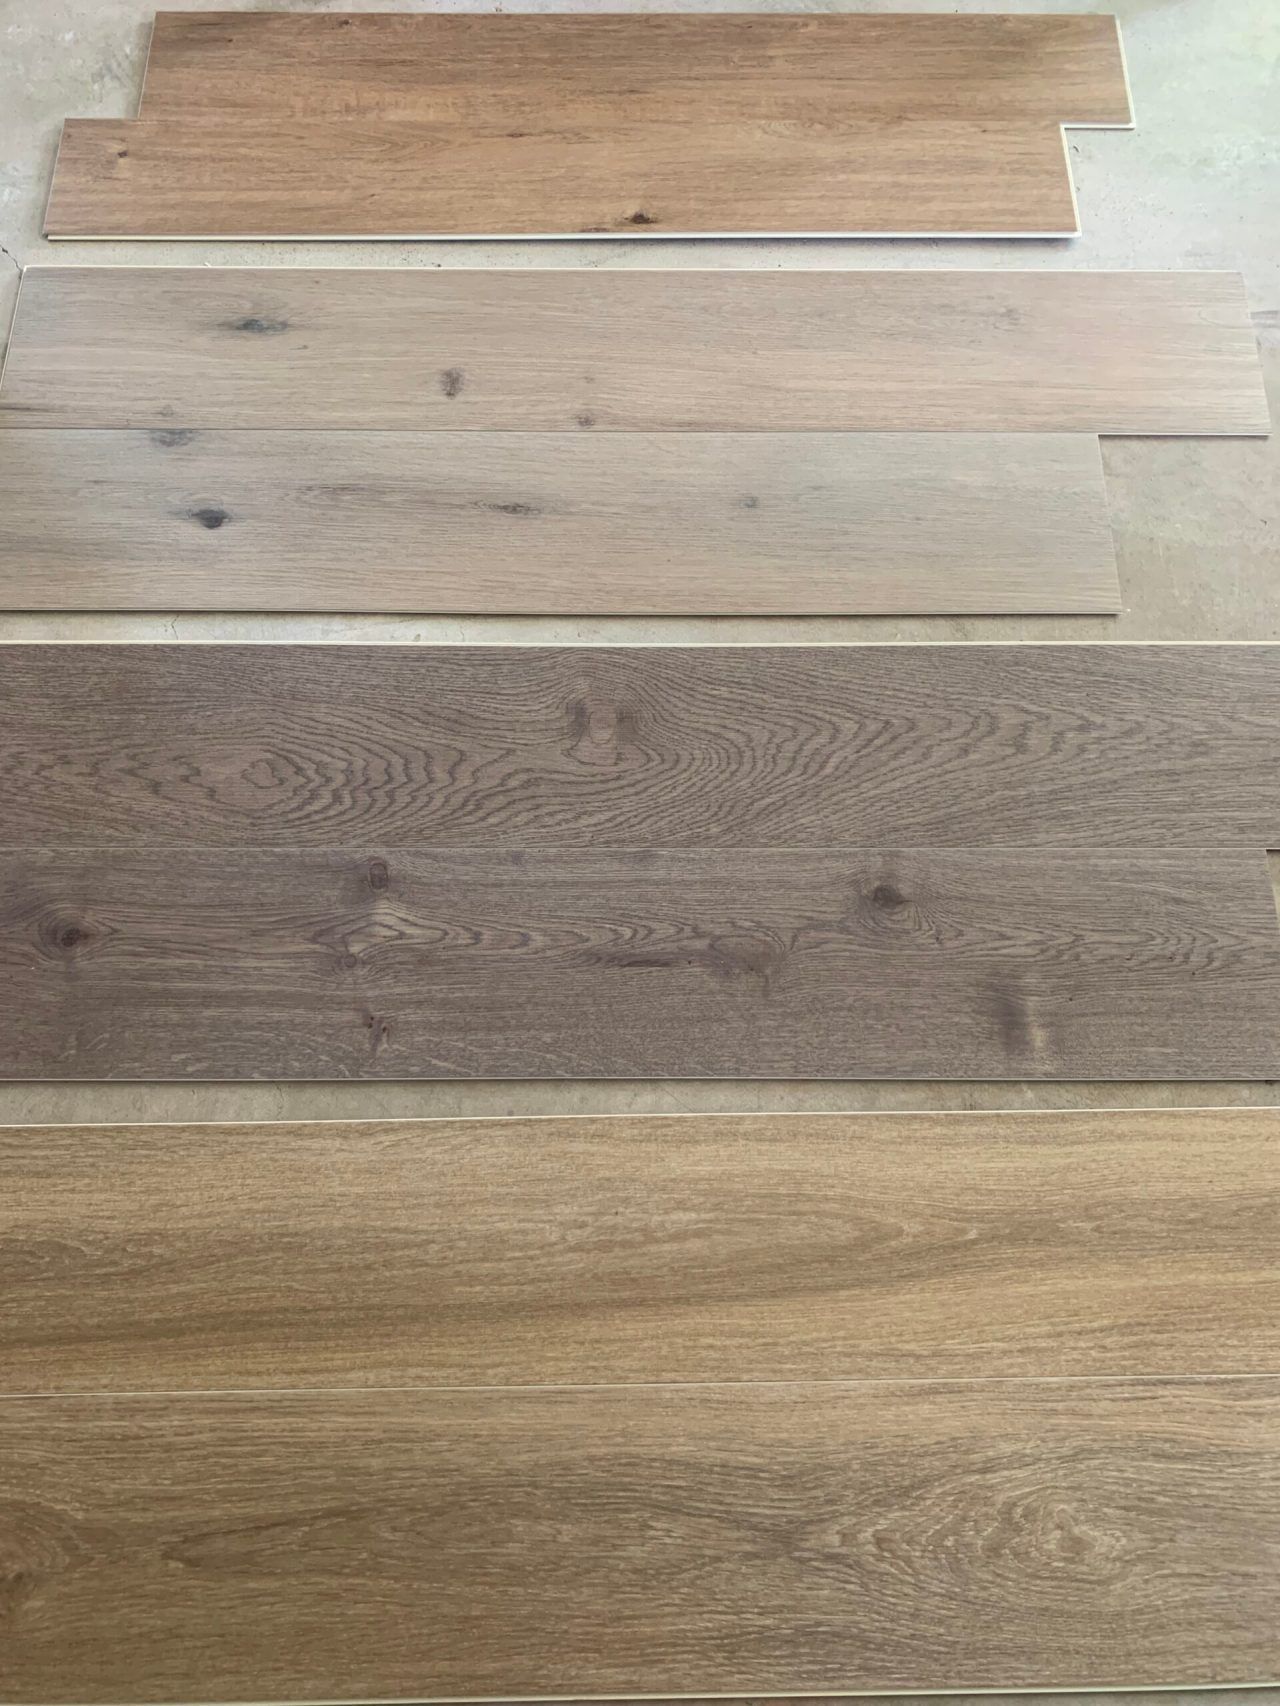 Why to use vinyl hardwood flooring?